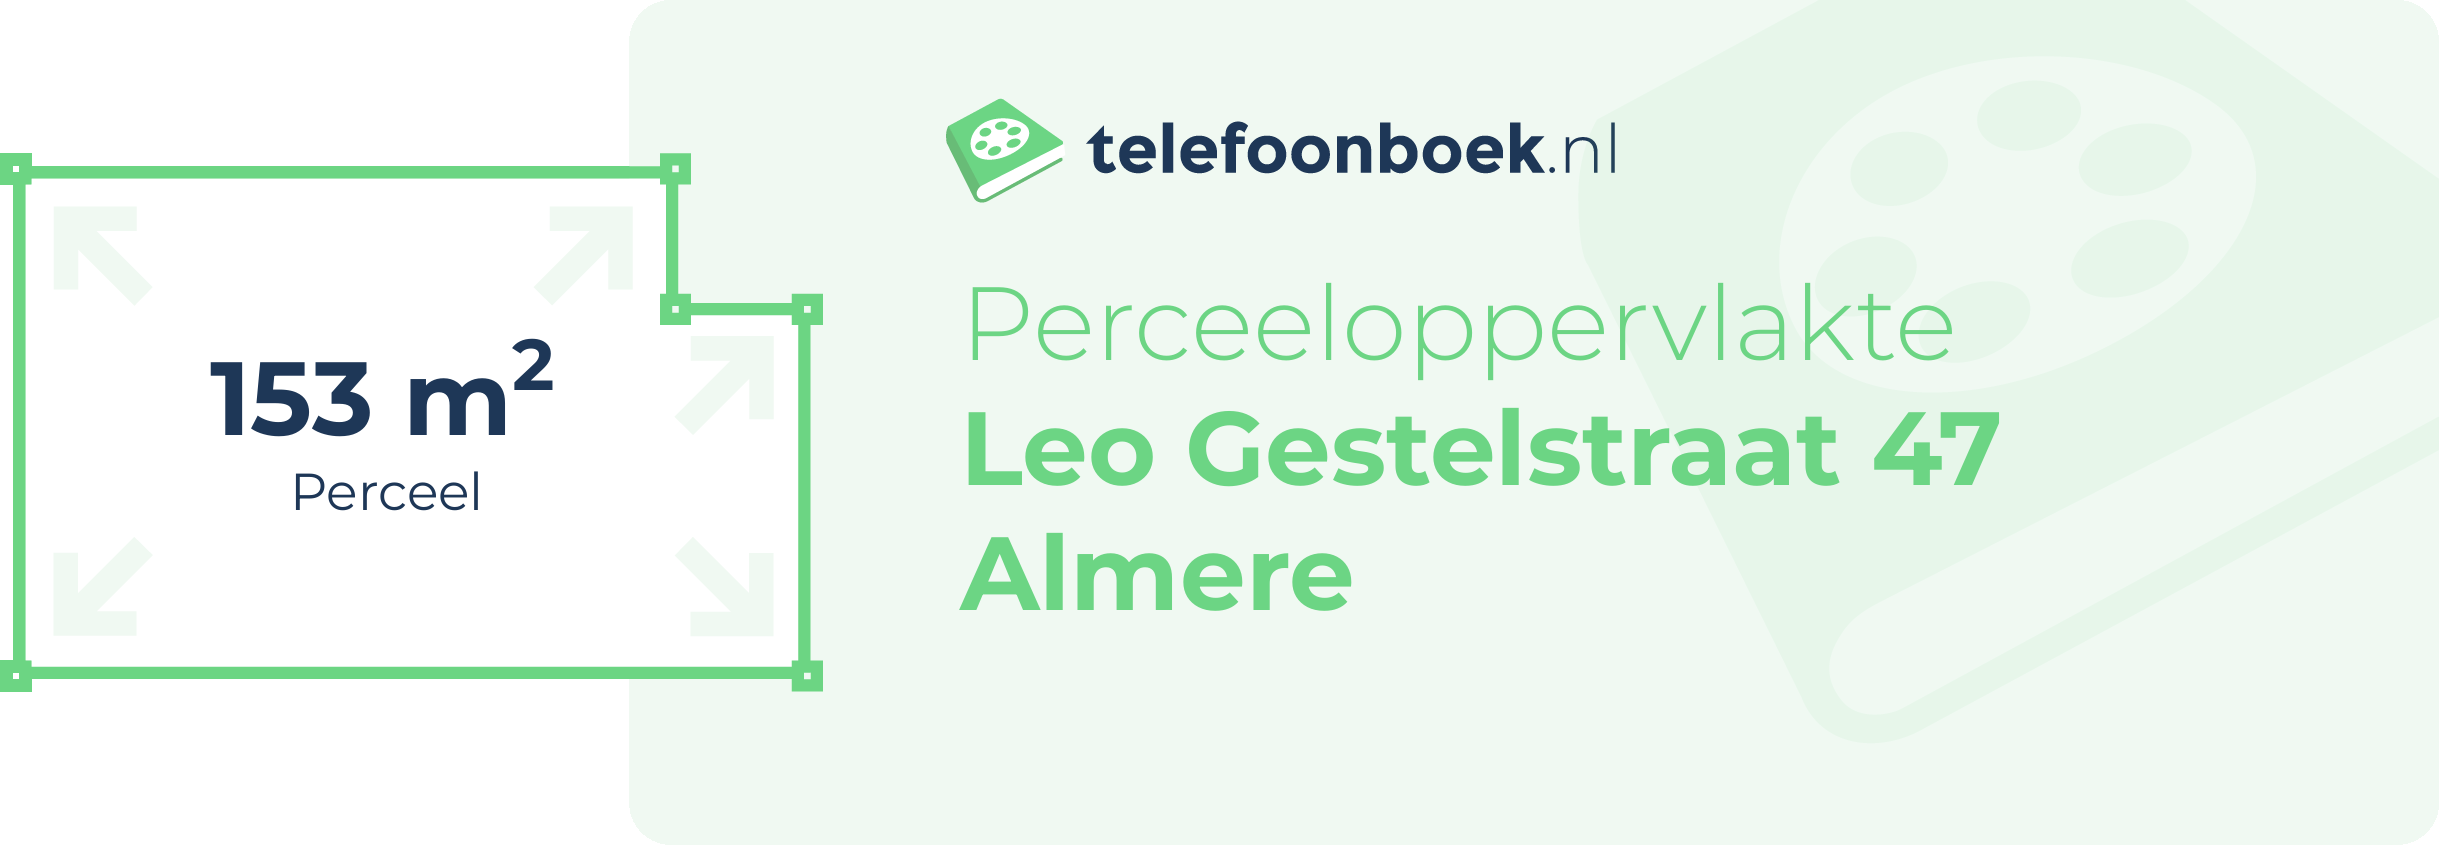 Perceeloppervlakte Leo Gestelstraat 47 Almere